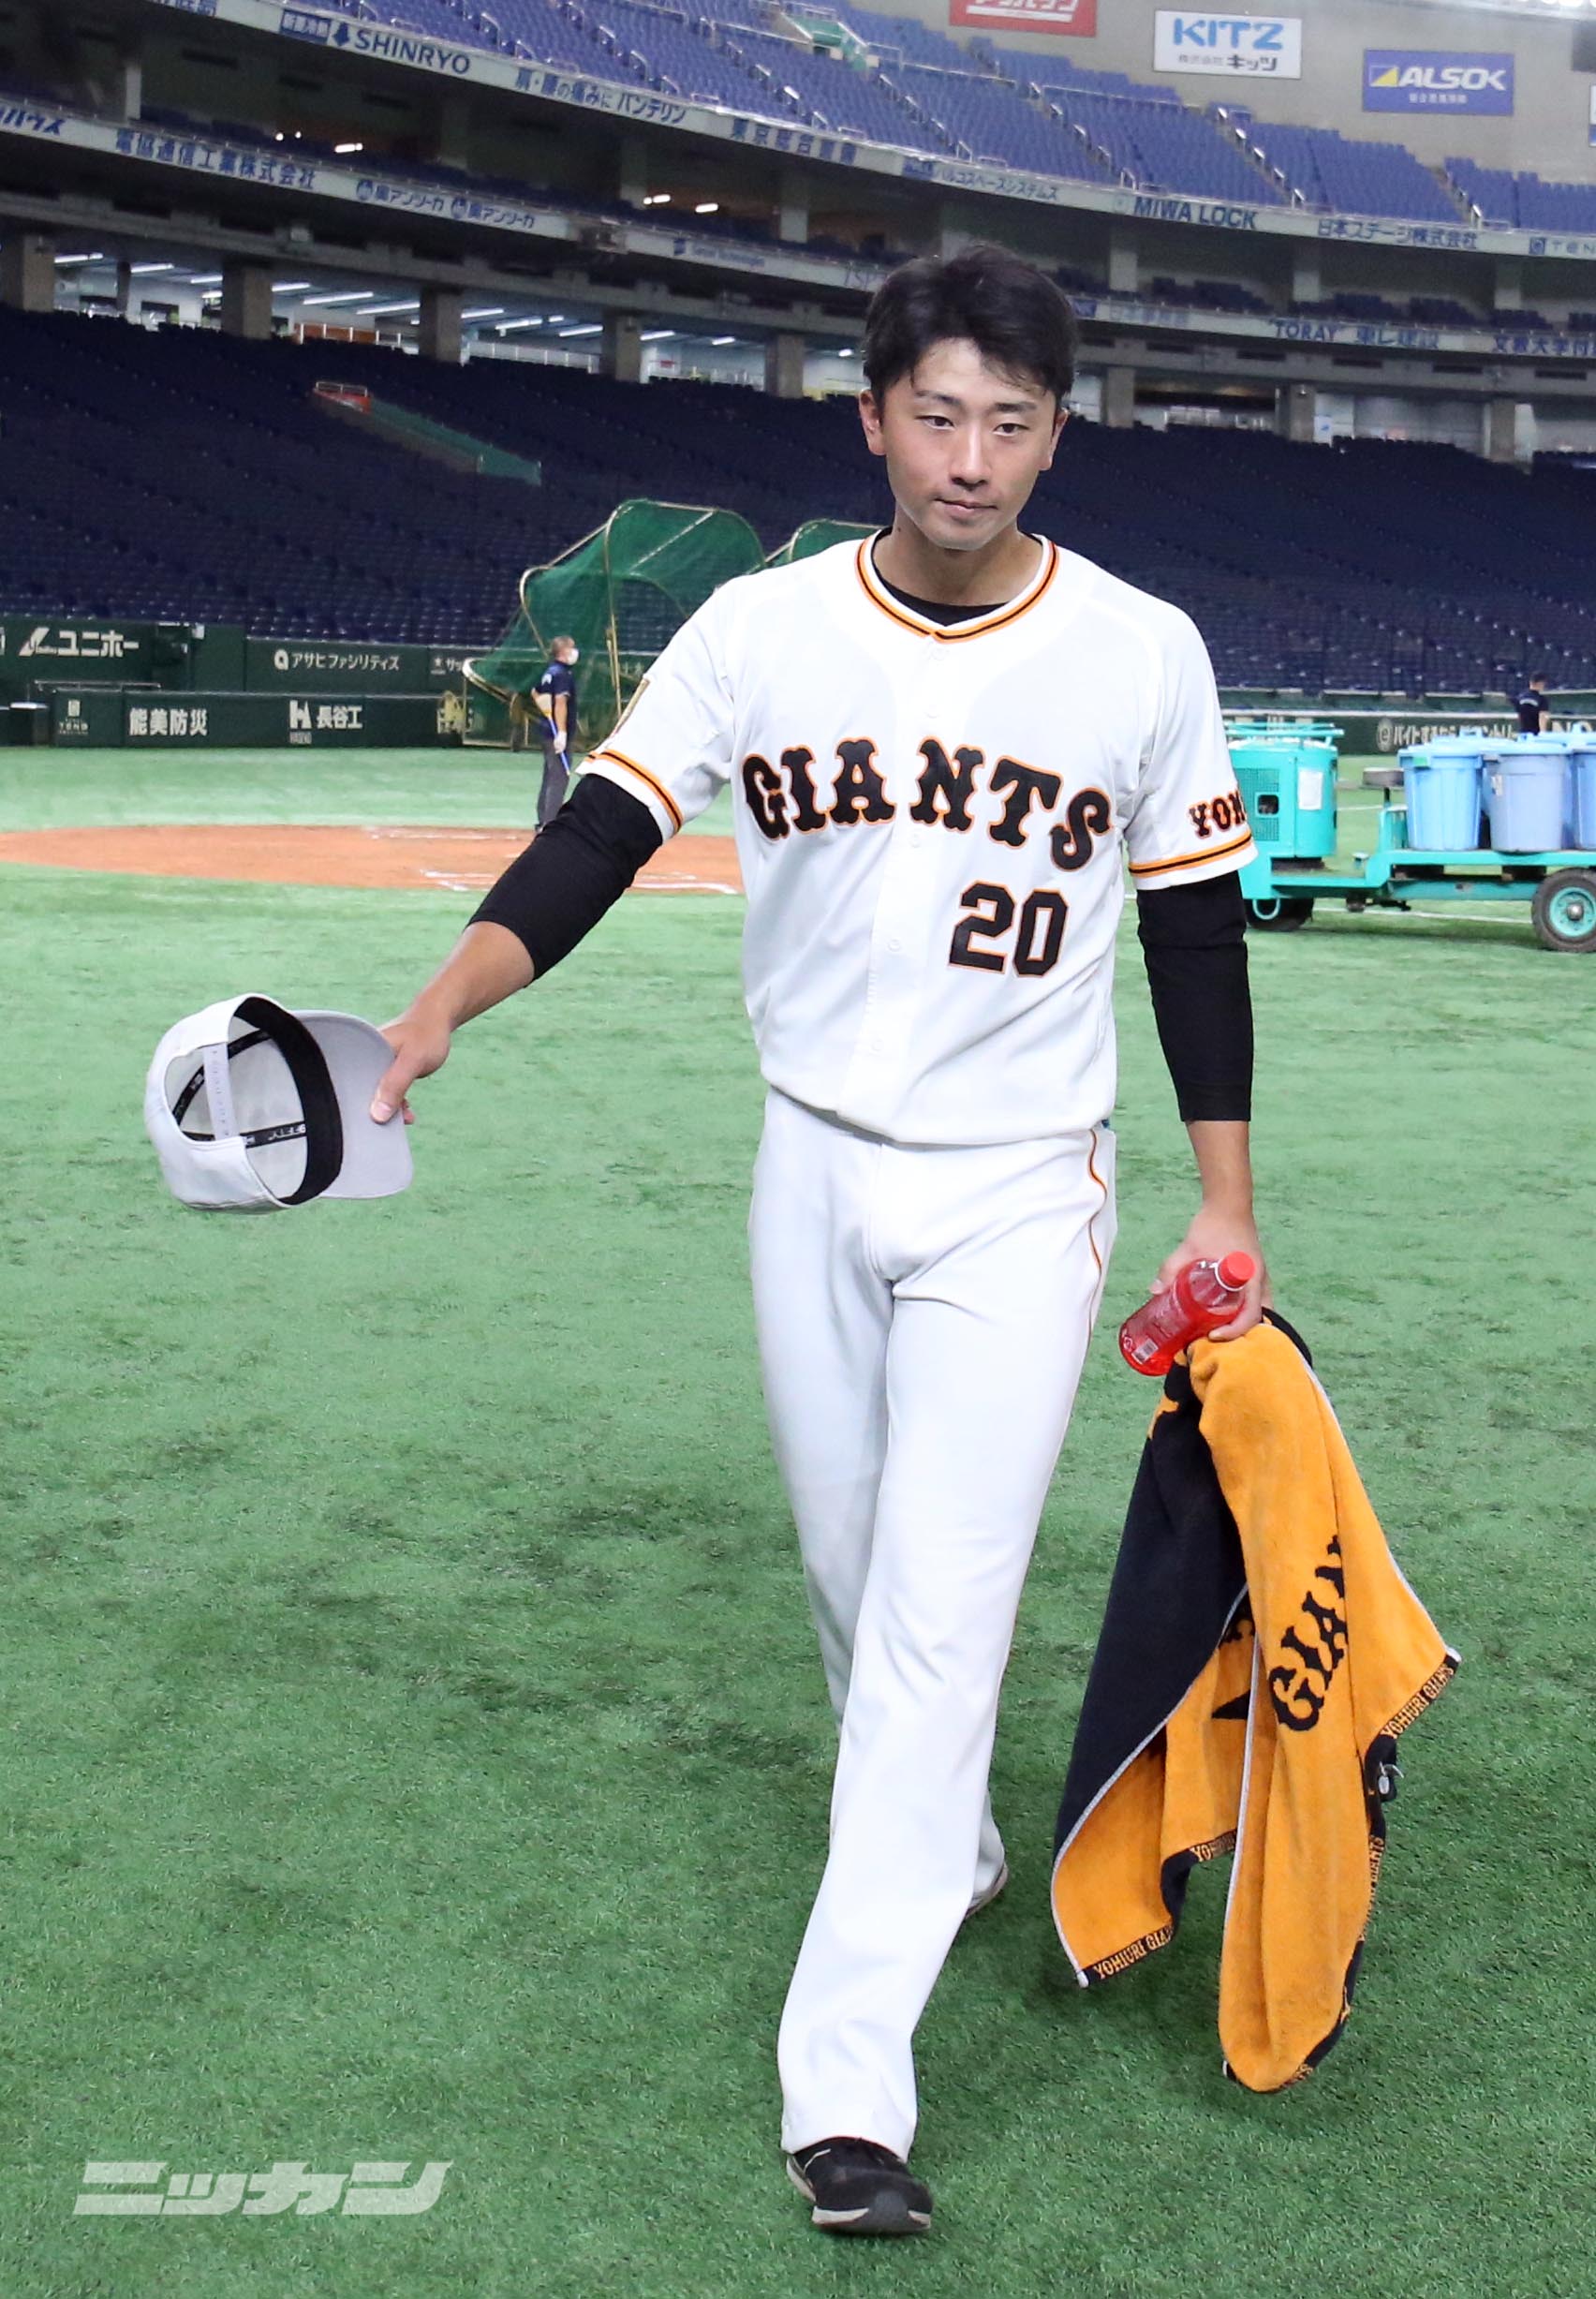 XO 巨人 Yohji Yamamoto 戸郷 翔征 レプリカユニフォーム - 野球